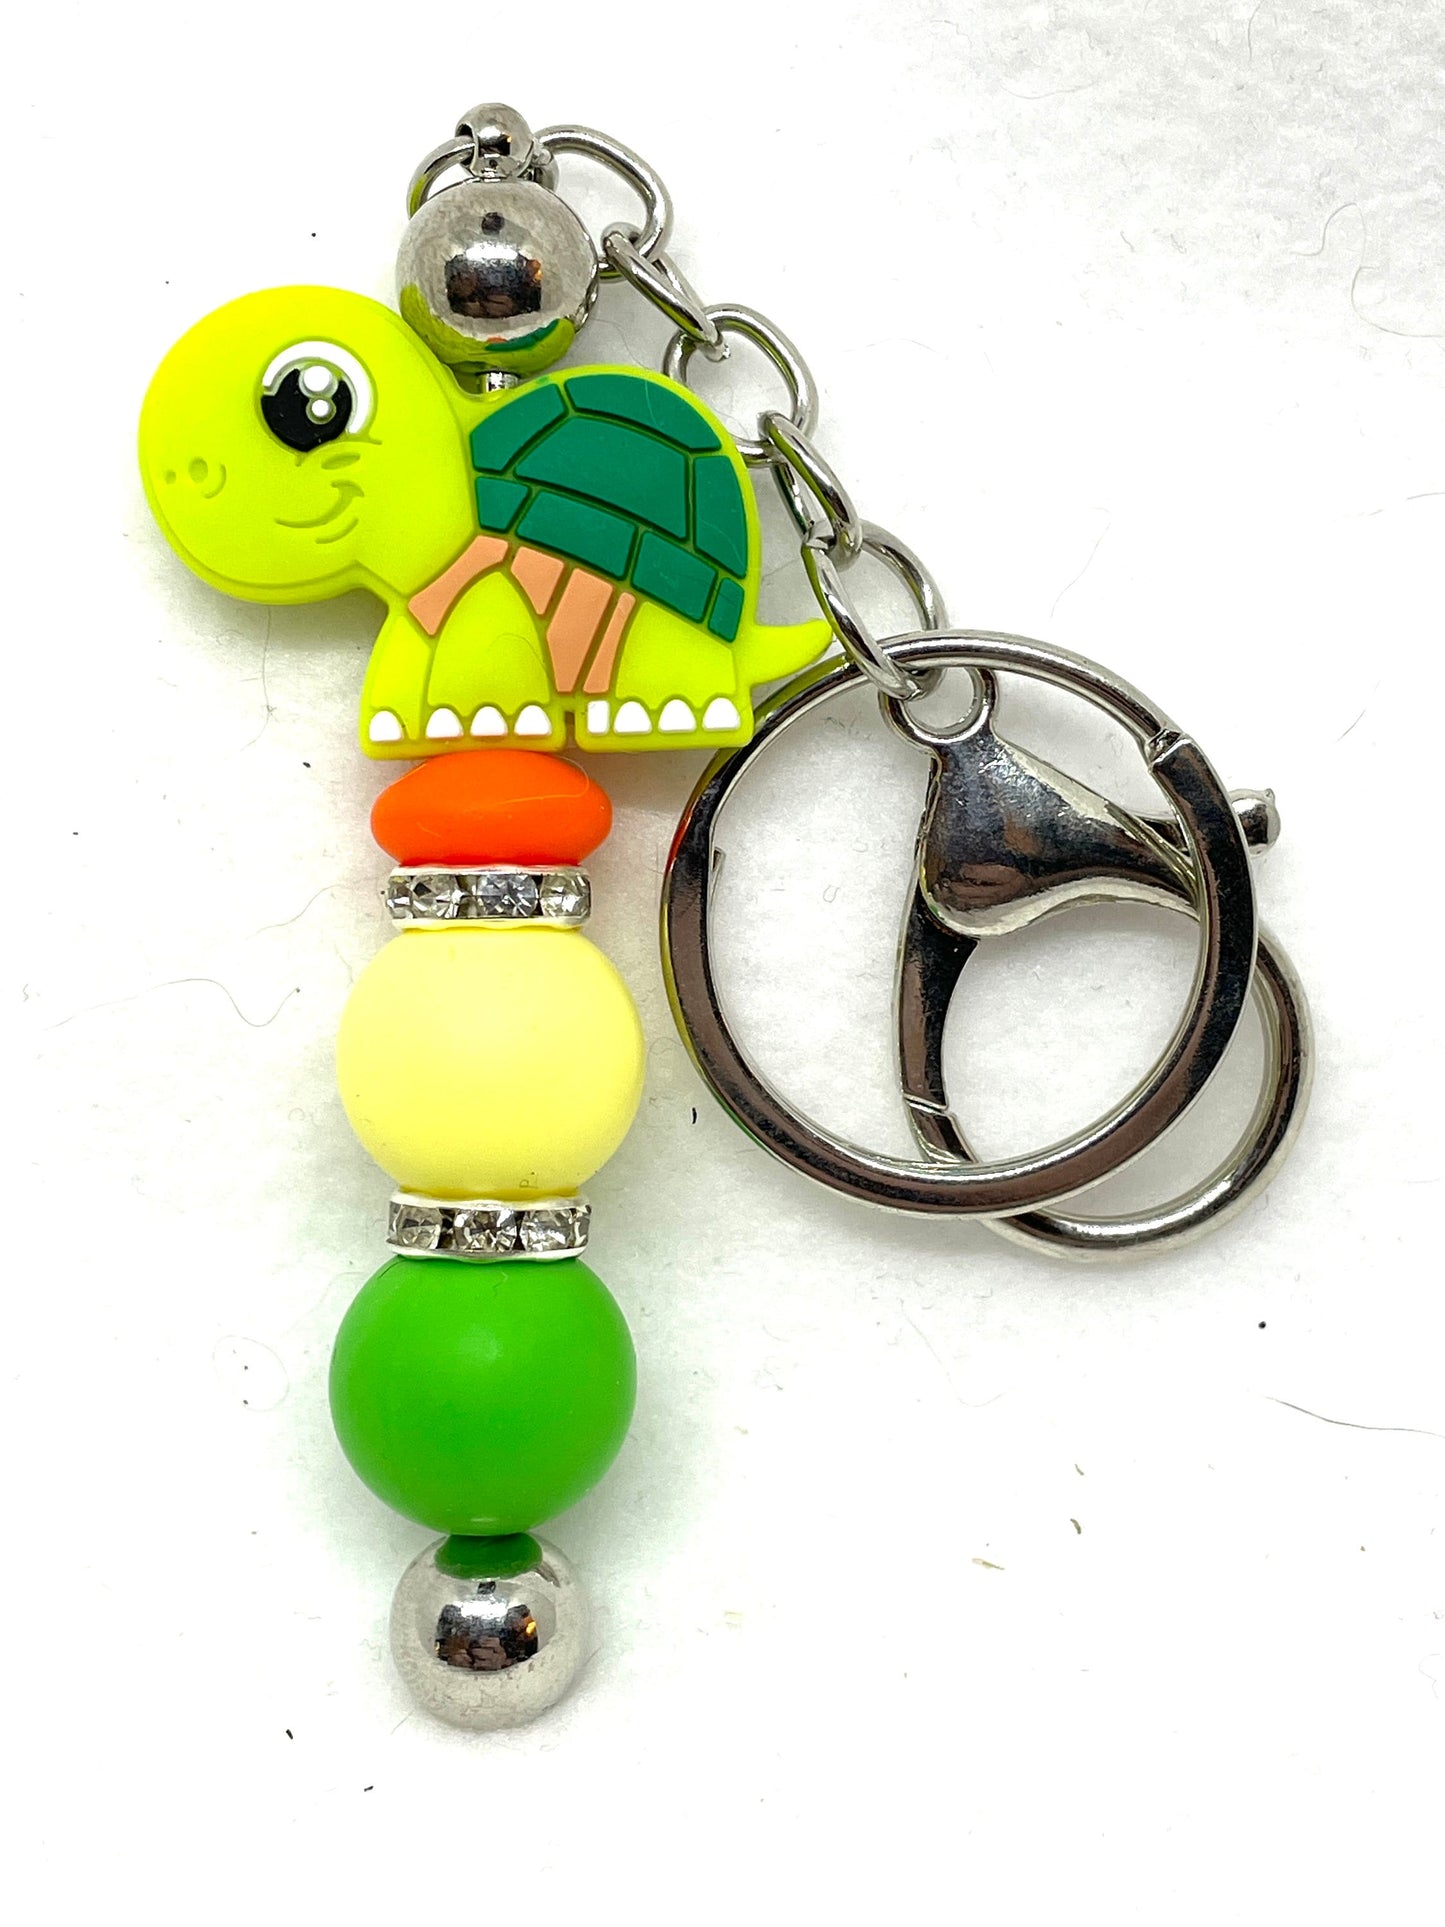 Beaded Turtle Keychains, Turtle Keychains, Green Turtle Keychains, Yellow Turtle Keychains, Turtle Lover Keychain, Turtle Collector Keychain